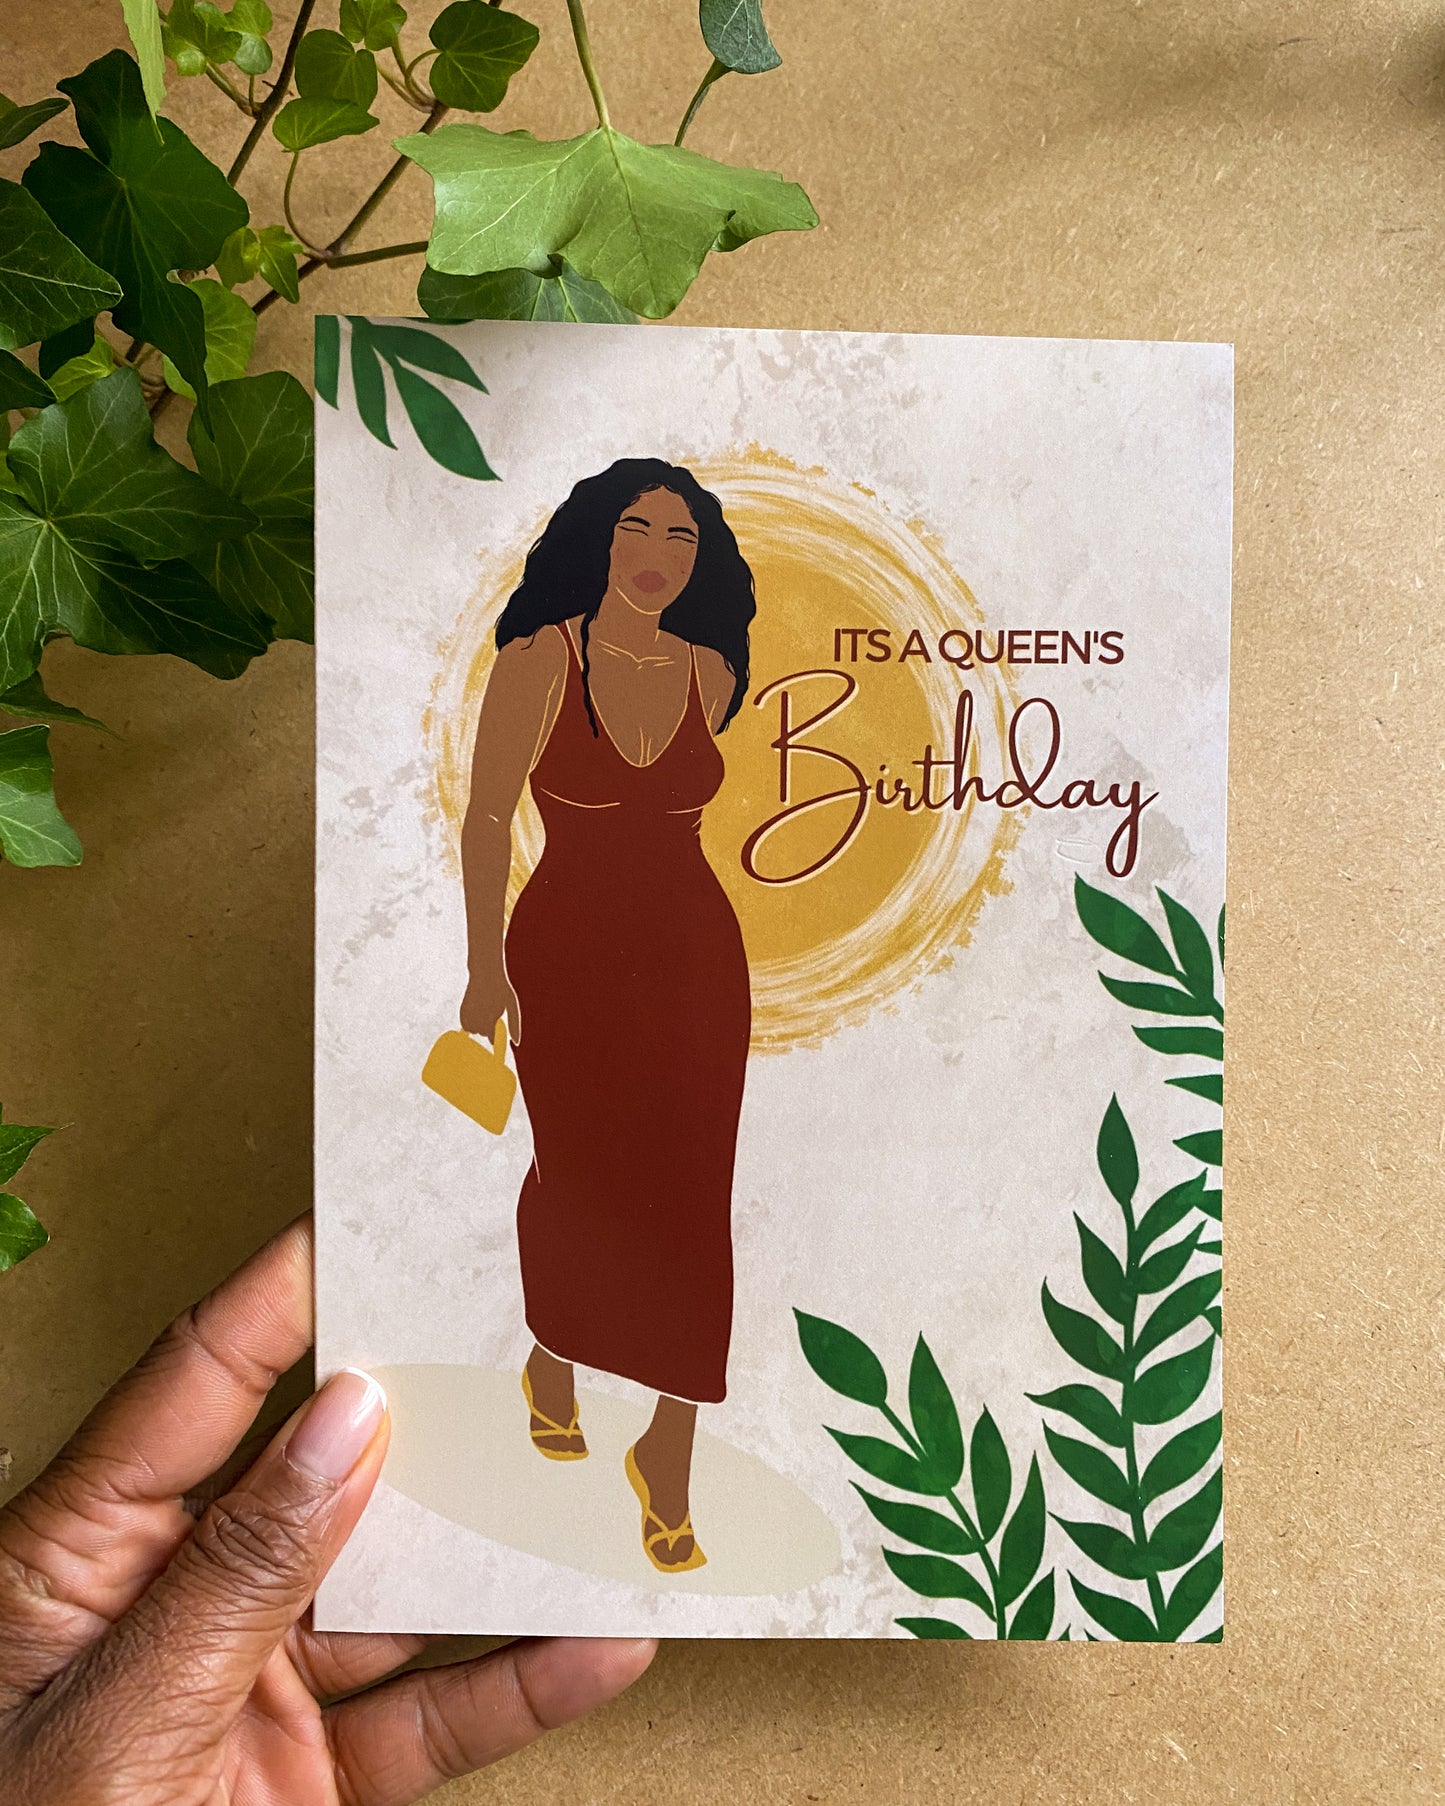 Destiny’s It’s a Queens Birthday - Black Woman Celebration Card